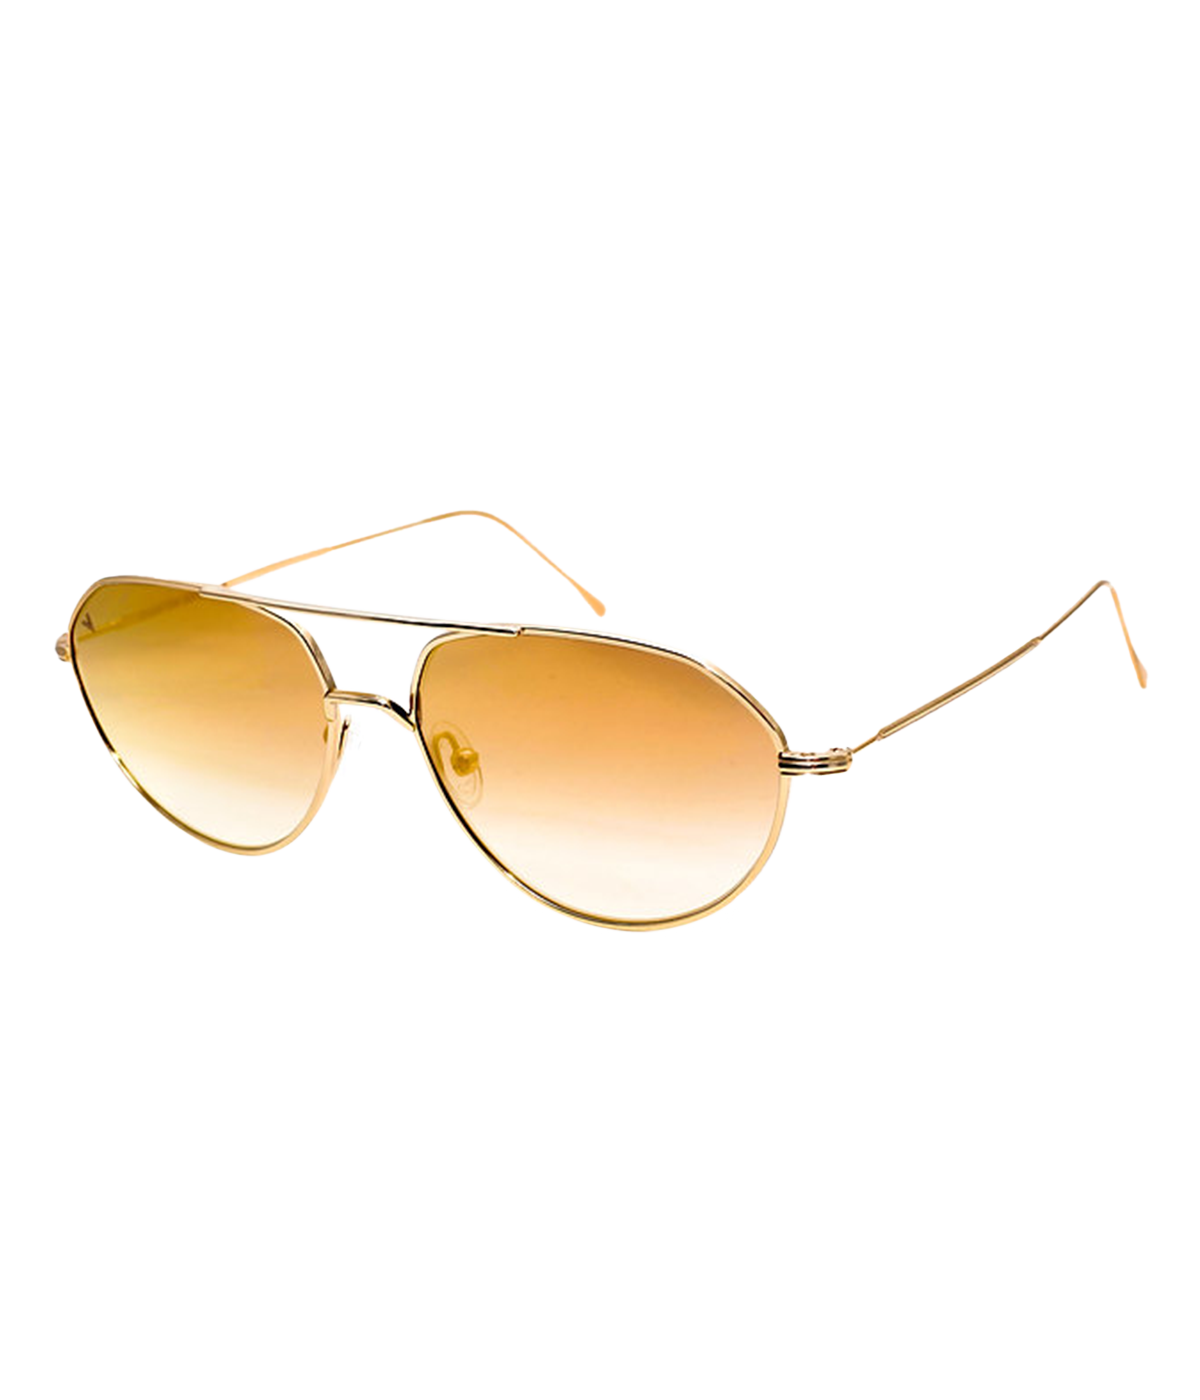 Edgar Sunglasses in Shiny Gold & Gold Flash